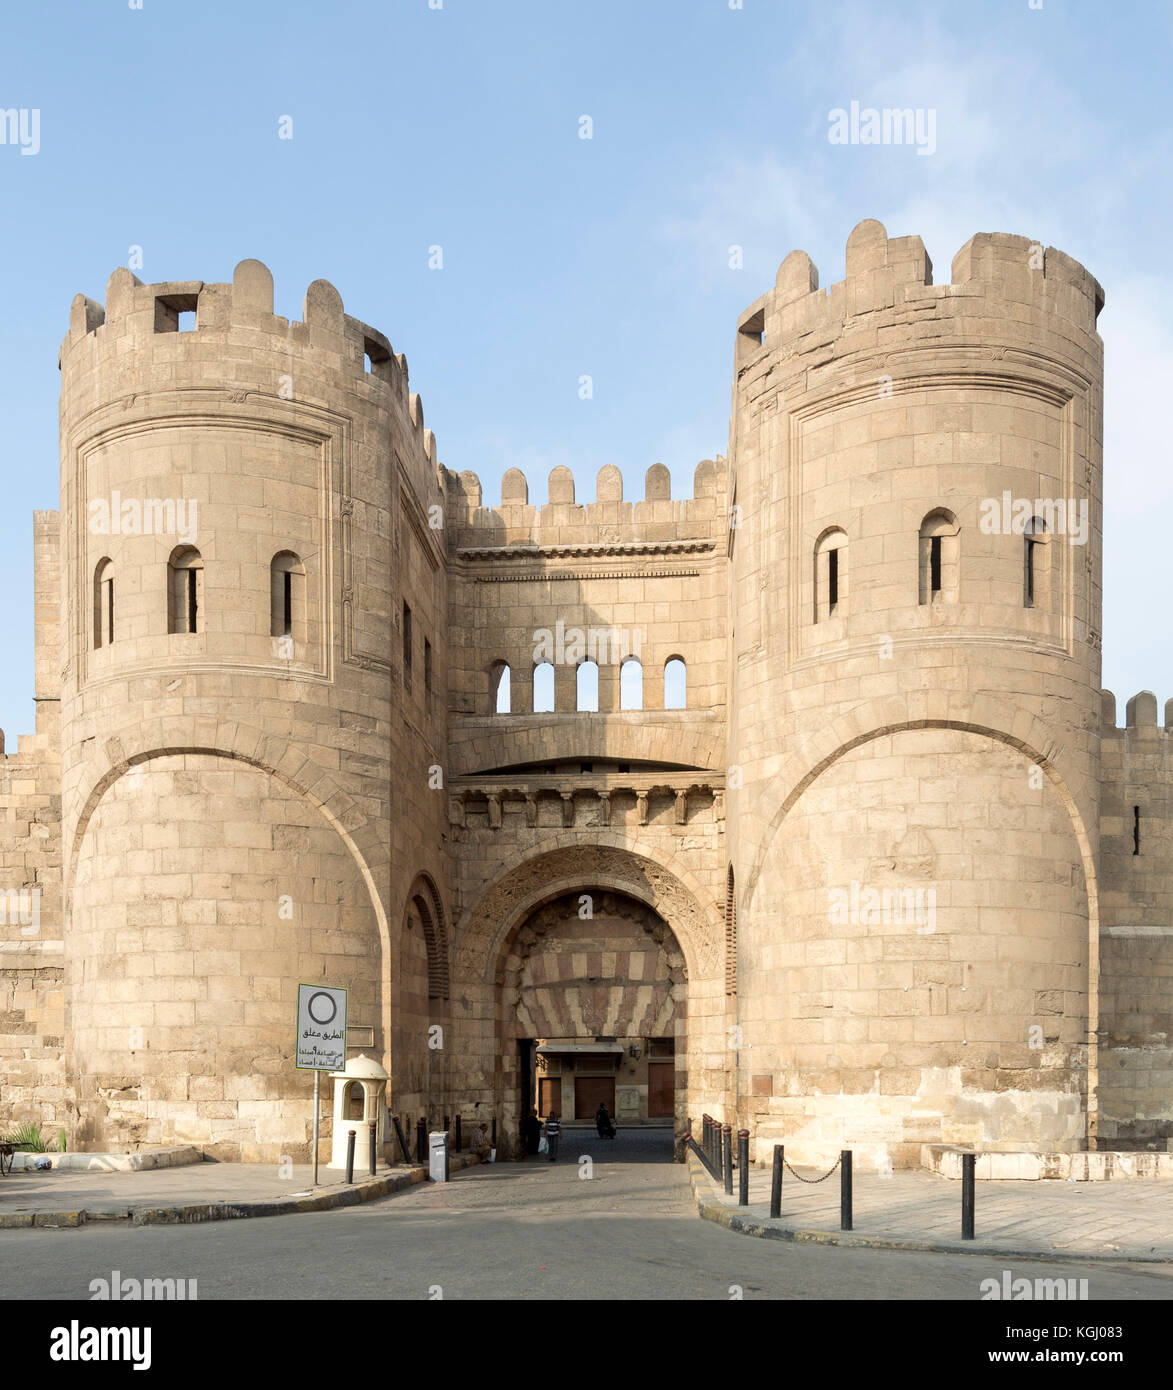 The Fatimid gate of Bab al-Futuh, Cairo, Egypt Stock Photo